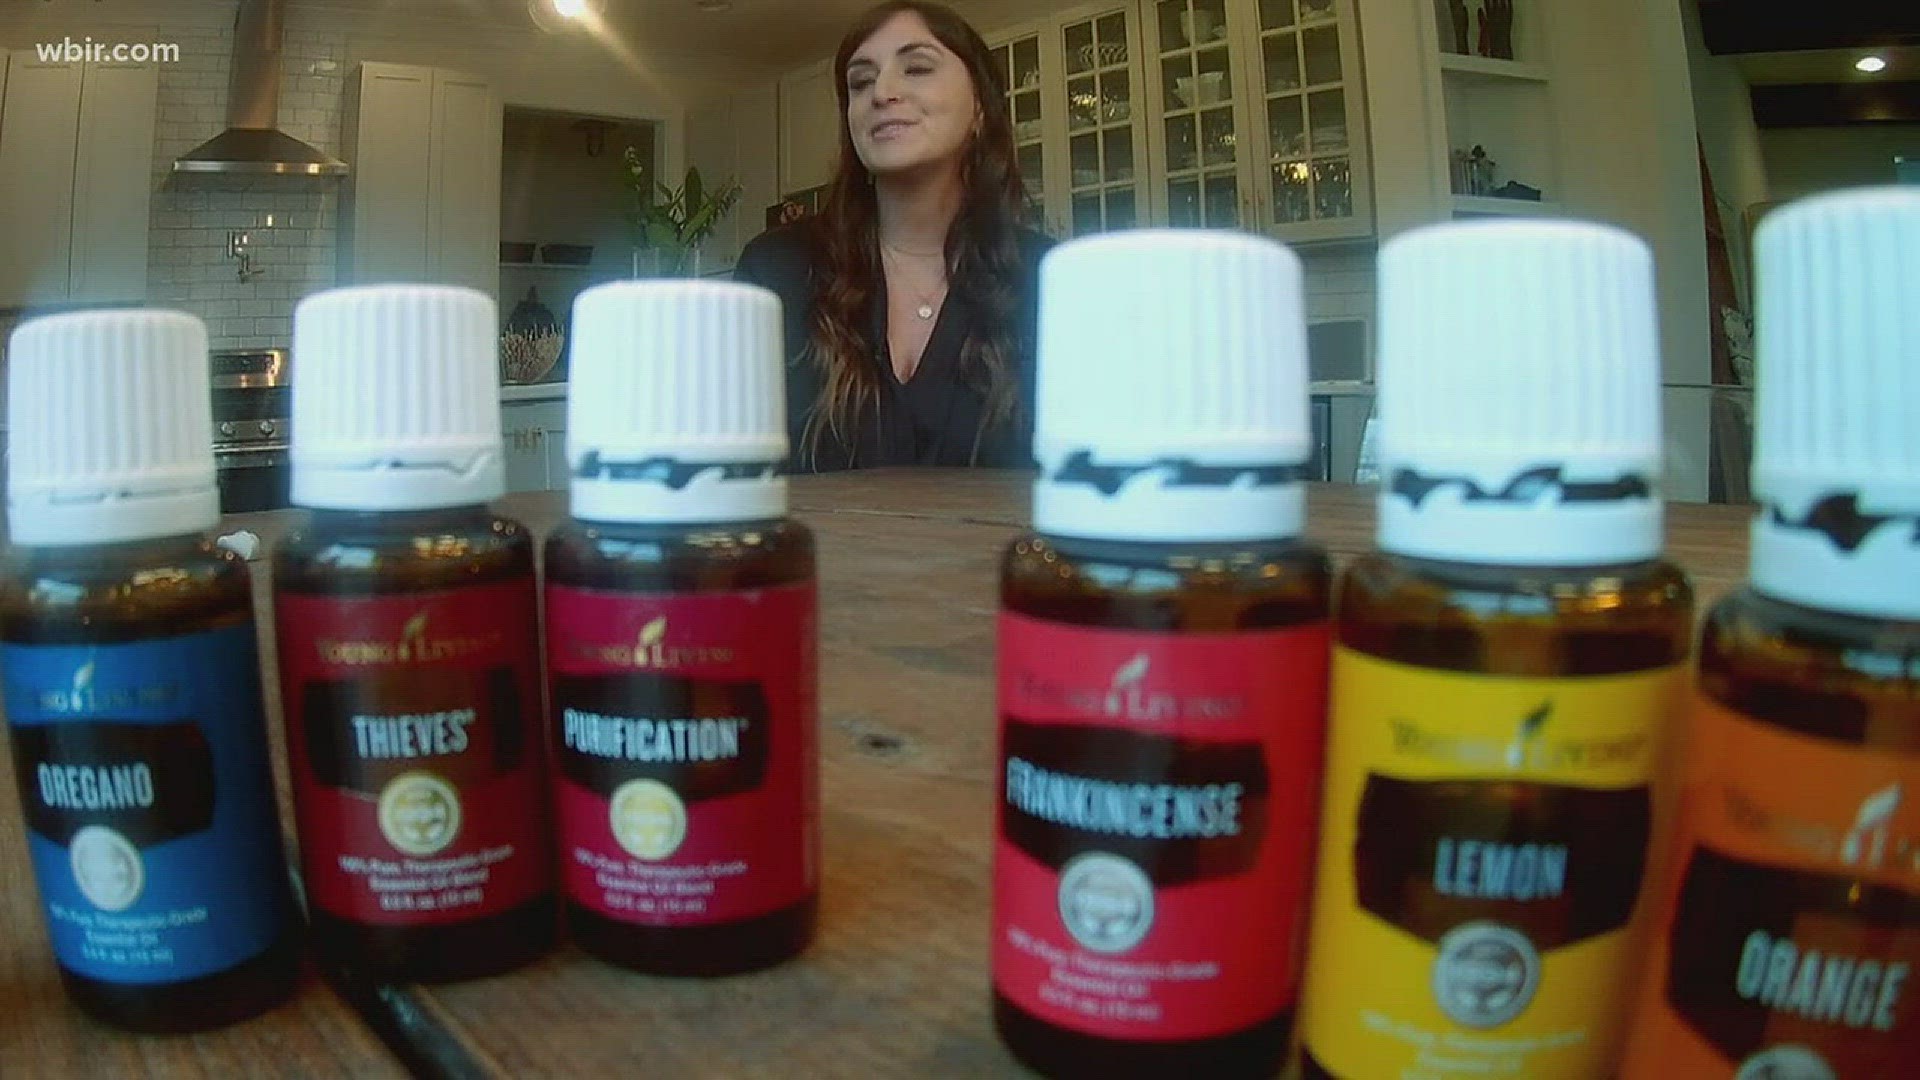 Hannah Davis shares her experience as a mom using essential oils.